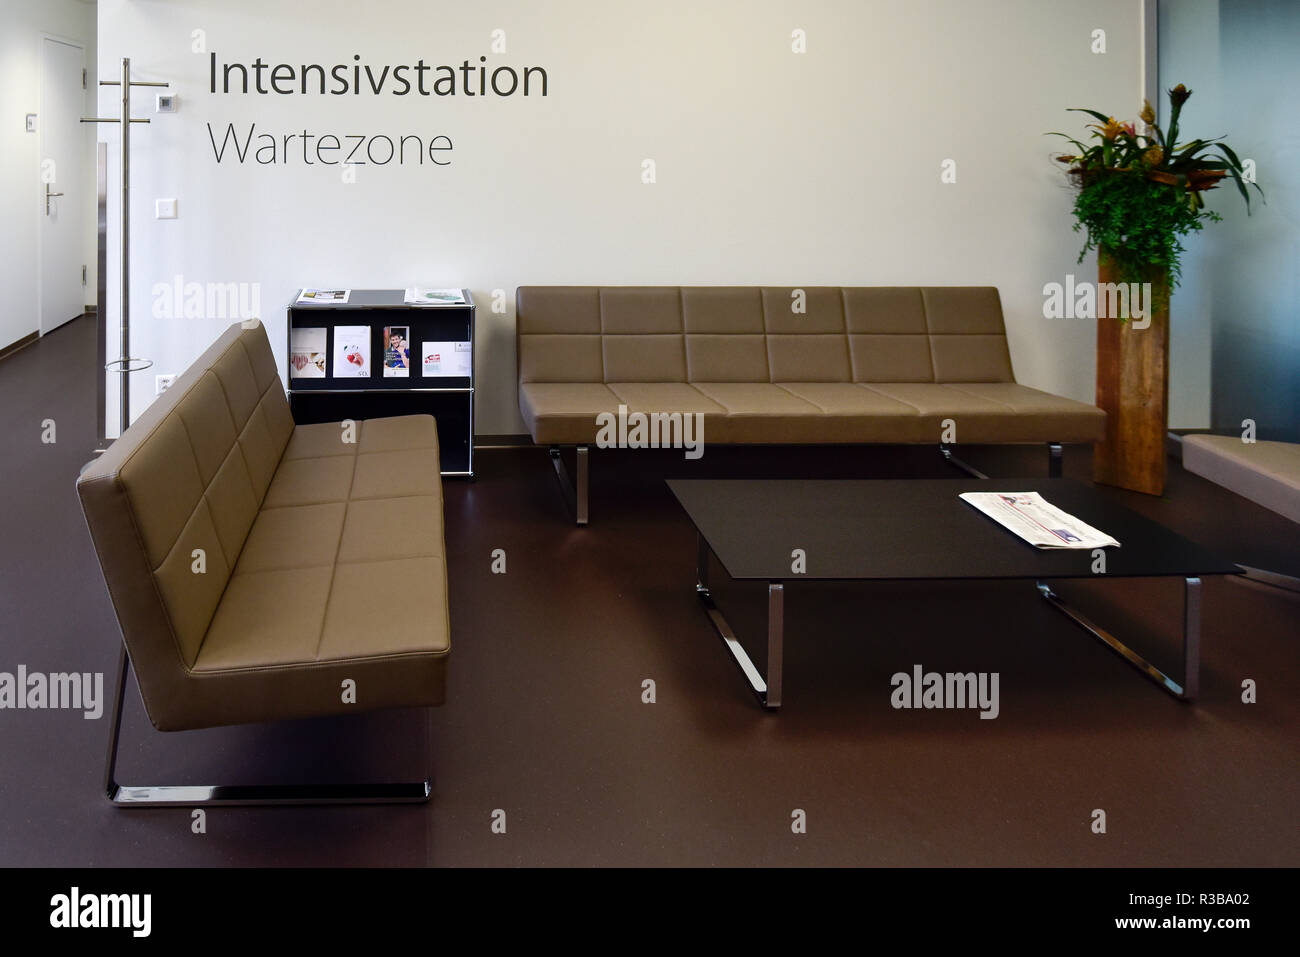 Waiting Room Intensive Care Unit, Switzerland Stock Photo